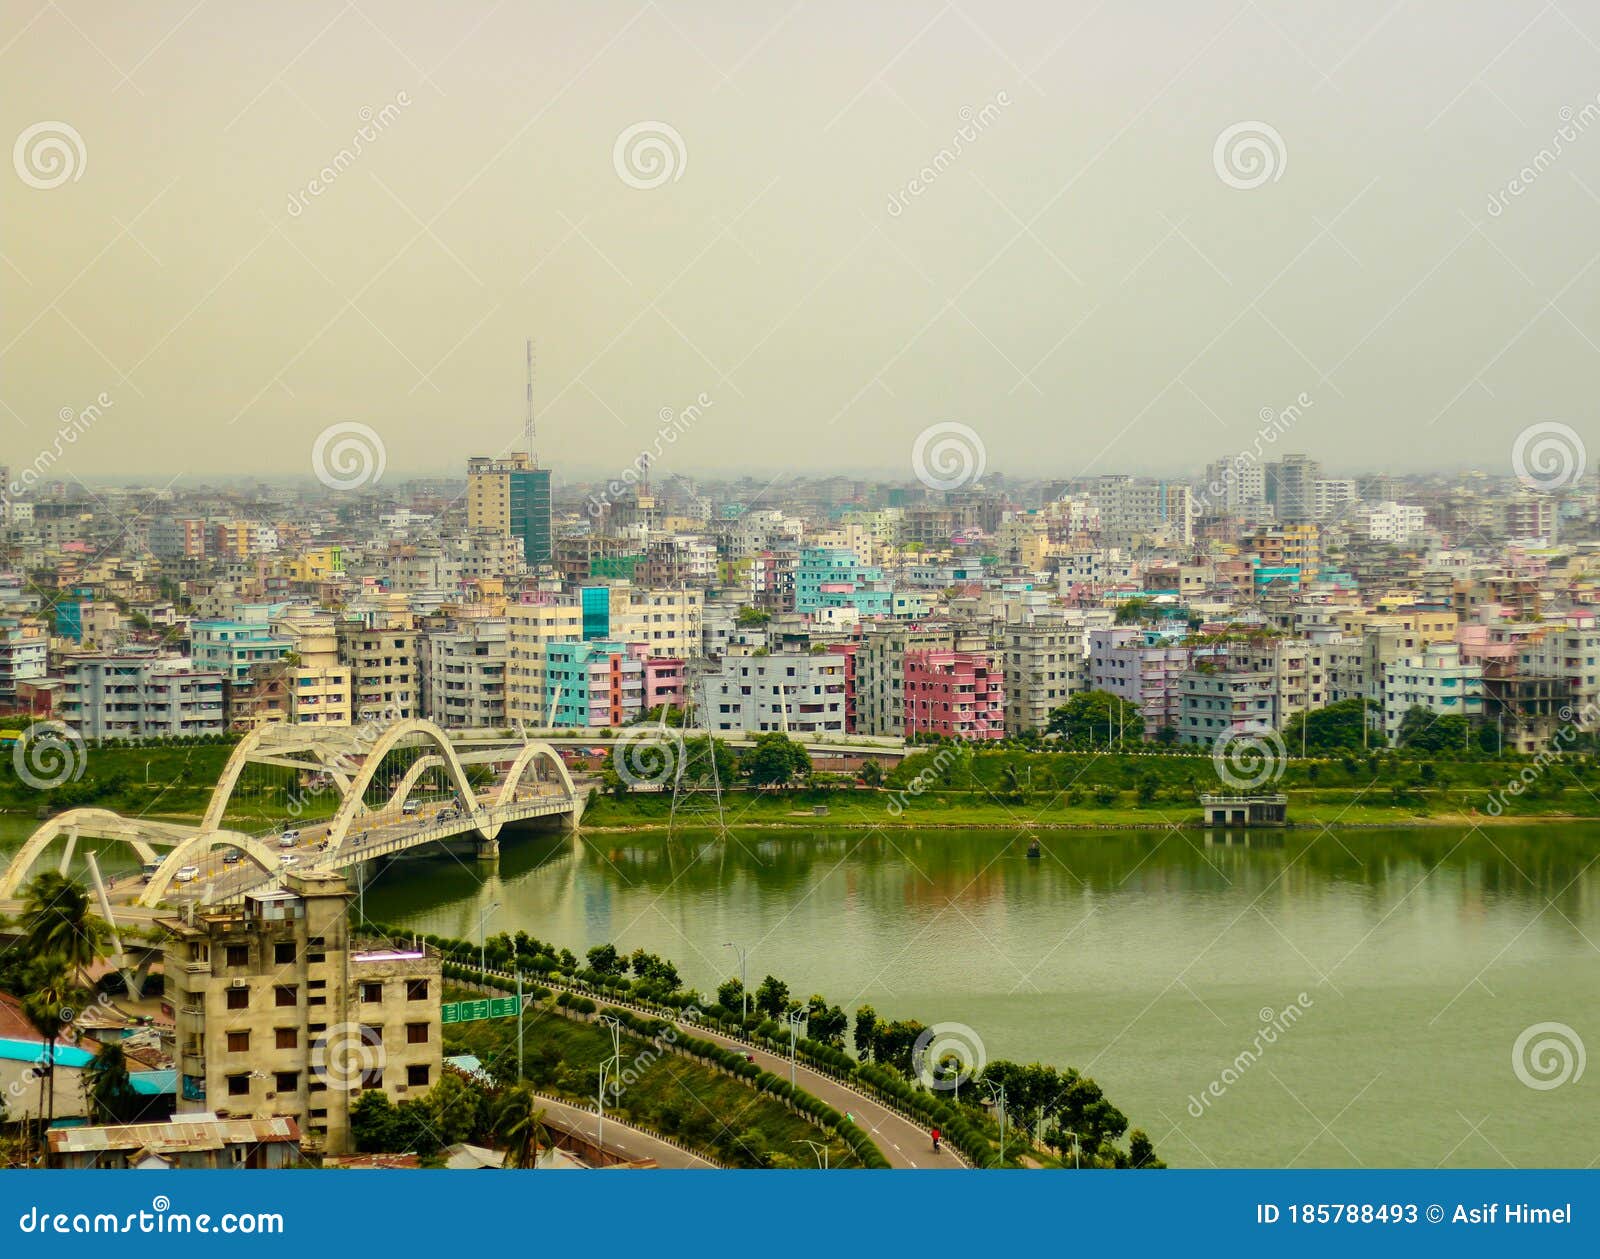 dhaka city, bangladesh - view of the buildings and a lake from the capital of bangladesh